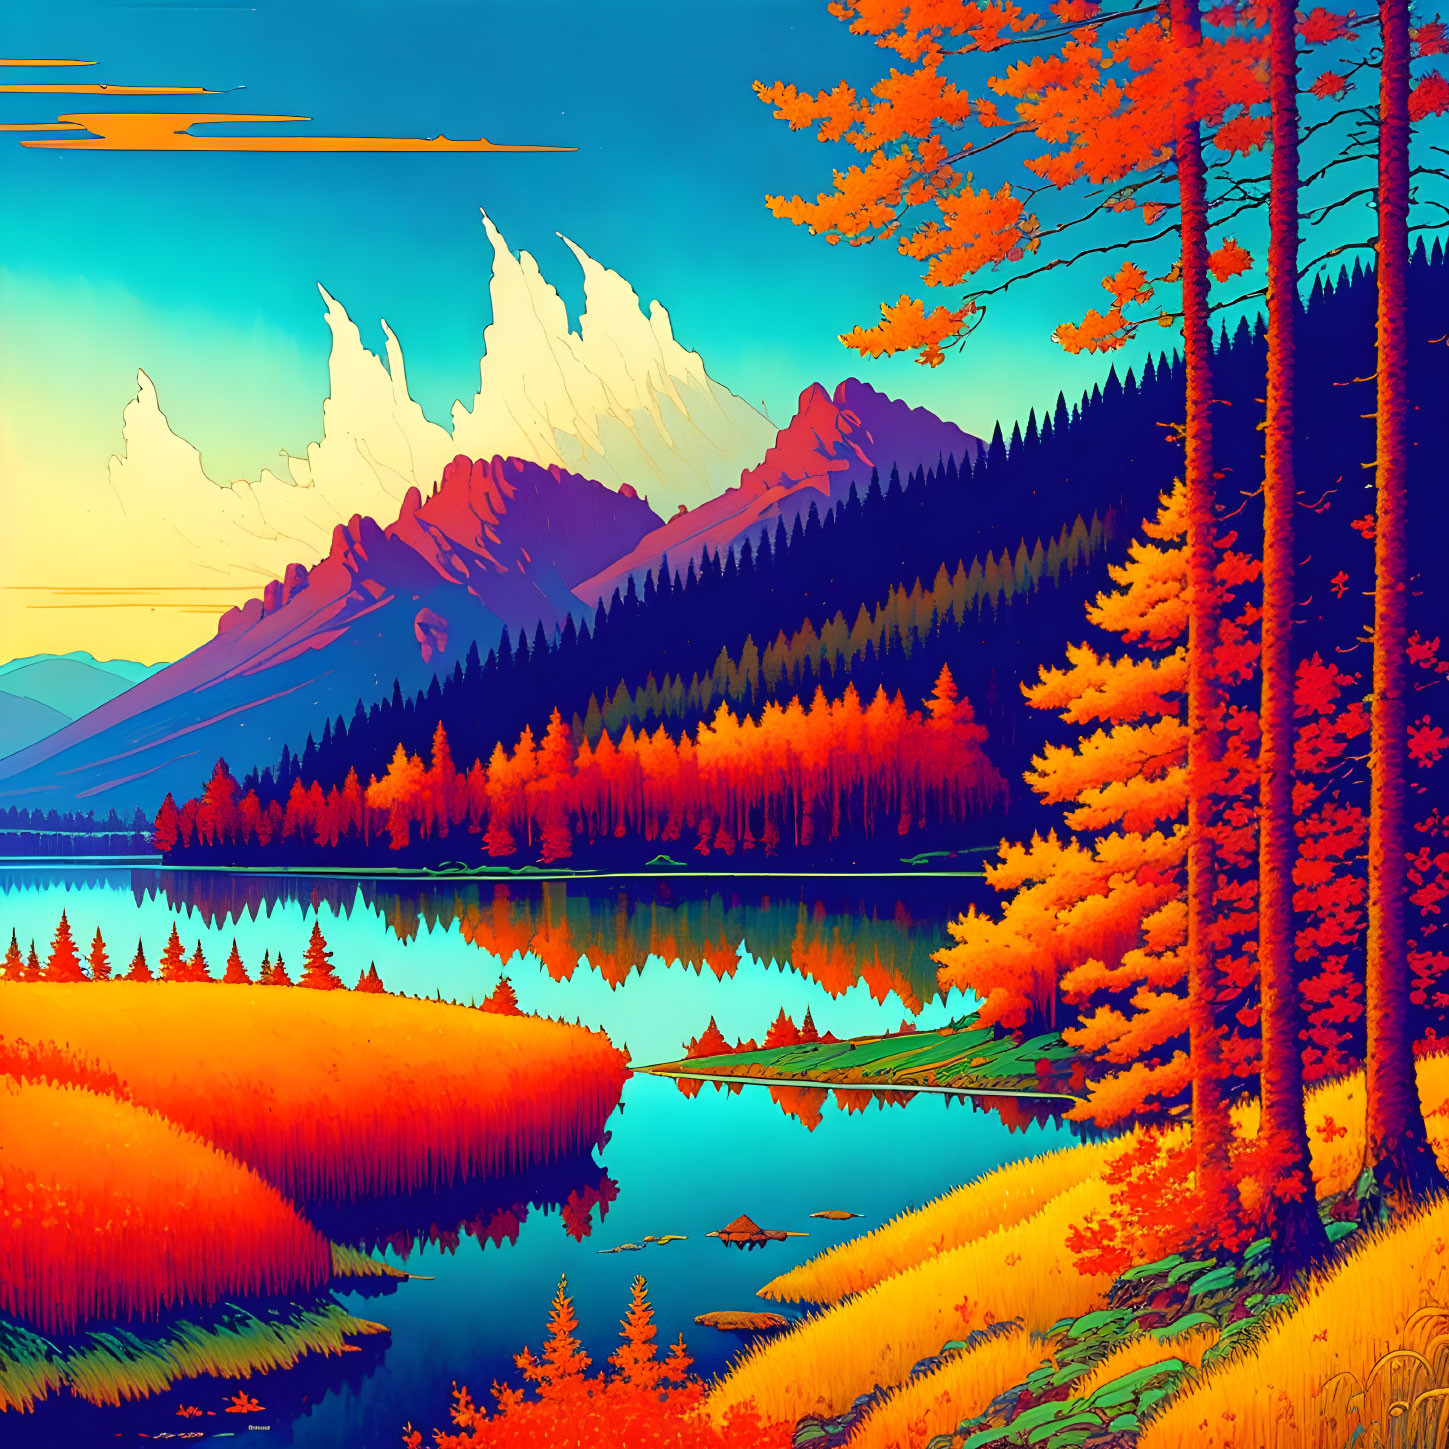 Fiery Orange Trees Reflecting in Calm Lake Amid Autumn Landscape